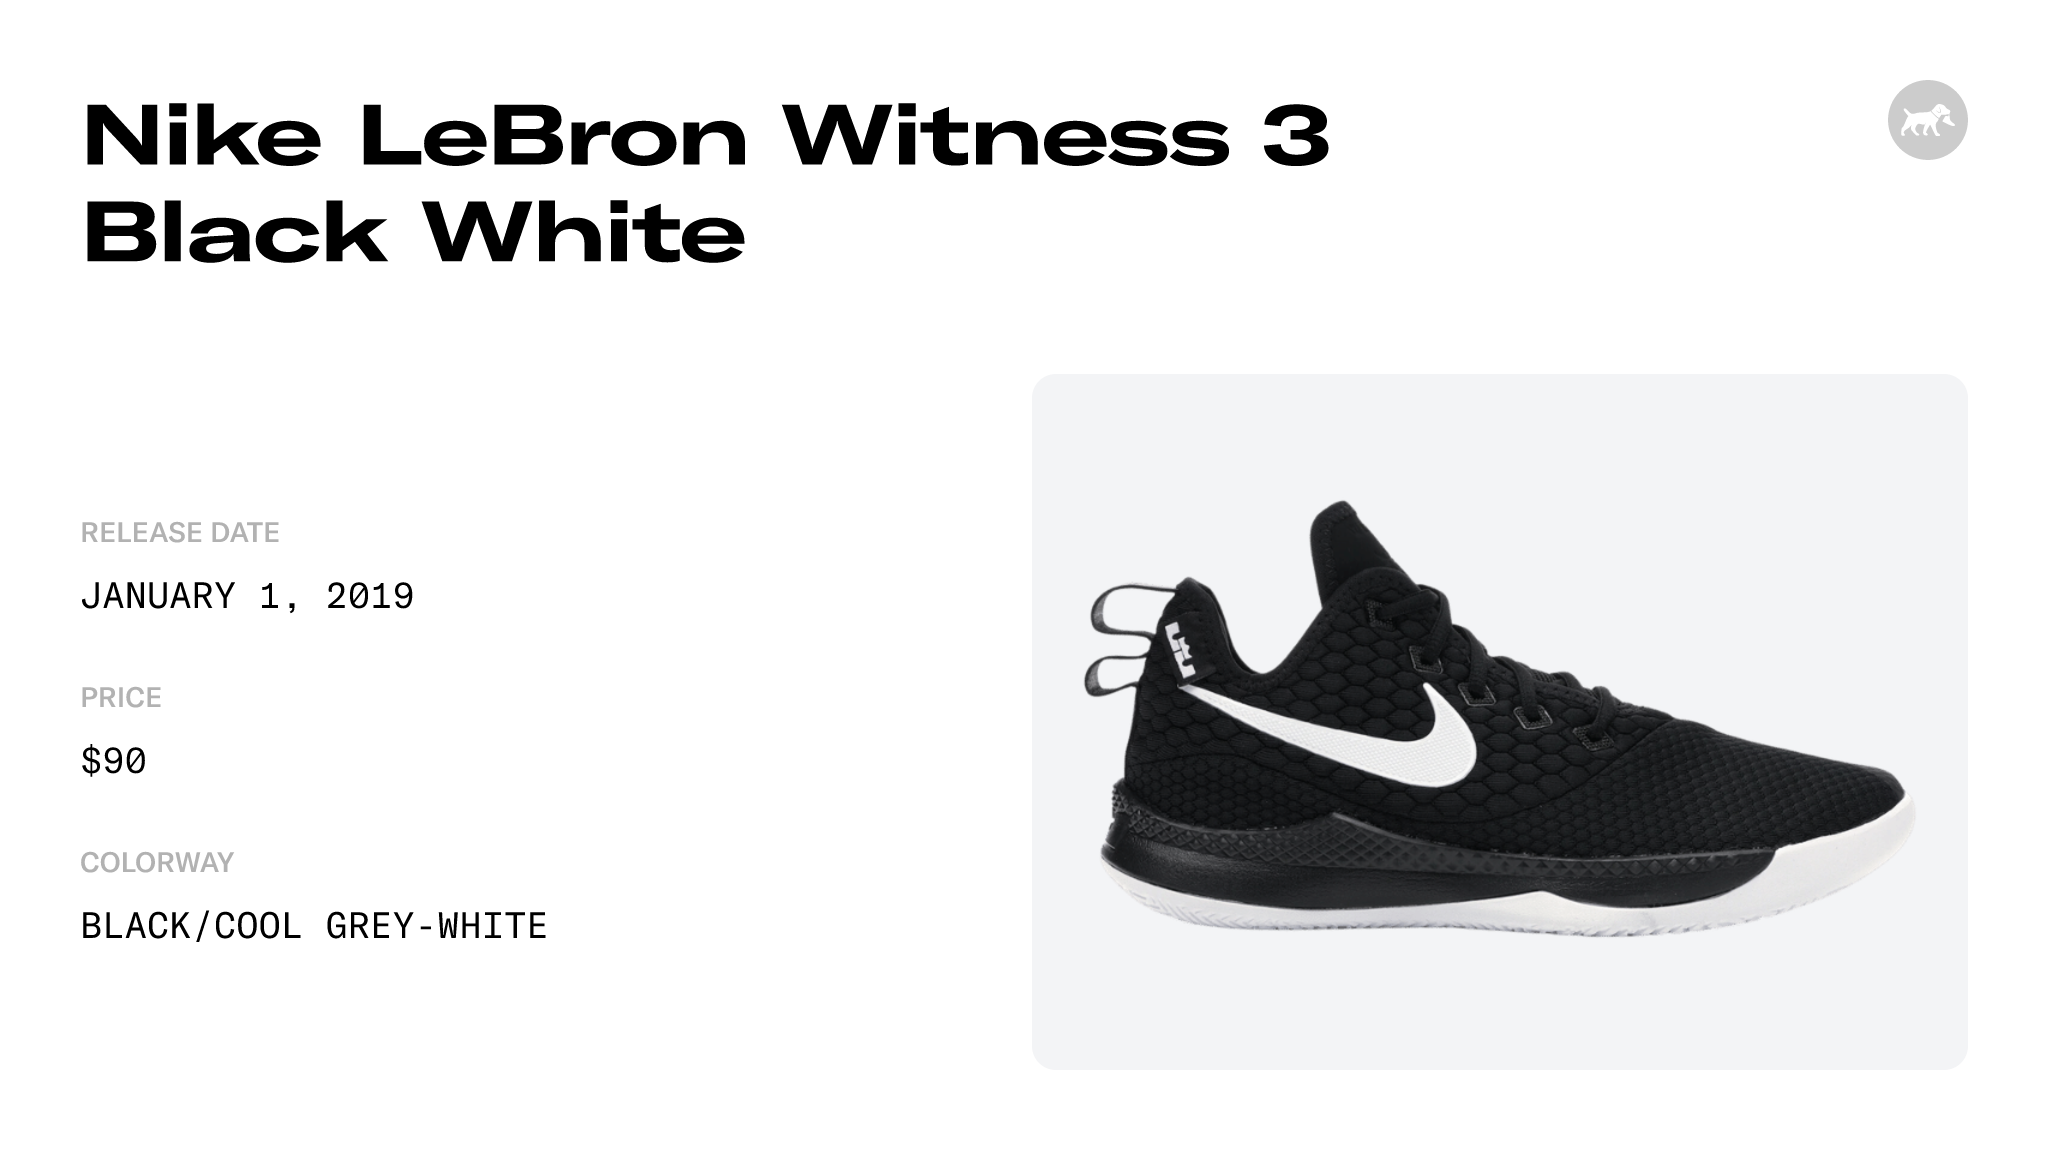 Nike LeBron Witness 3 Black White - AO4433-001 Raffles and Release Date